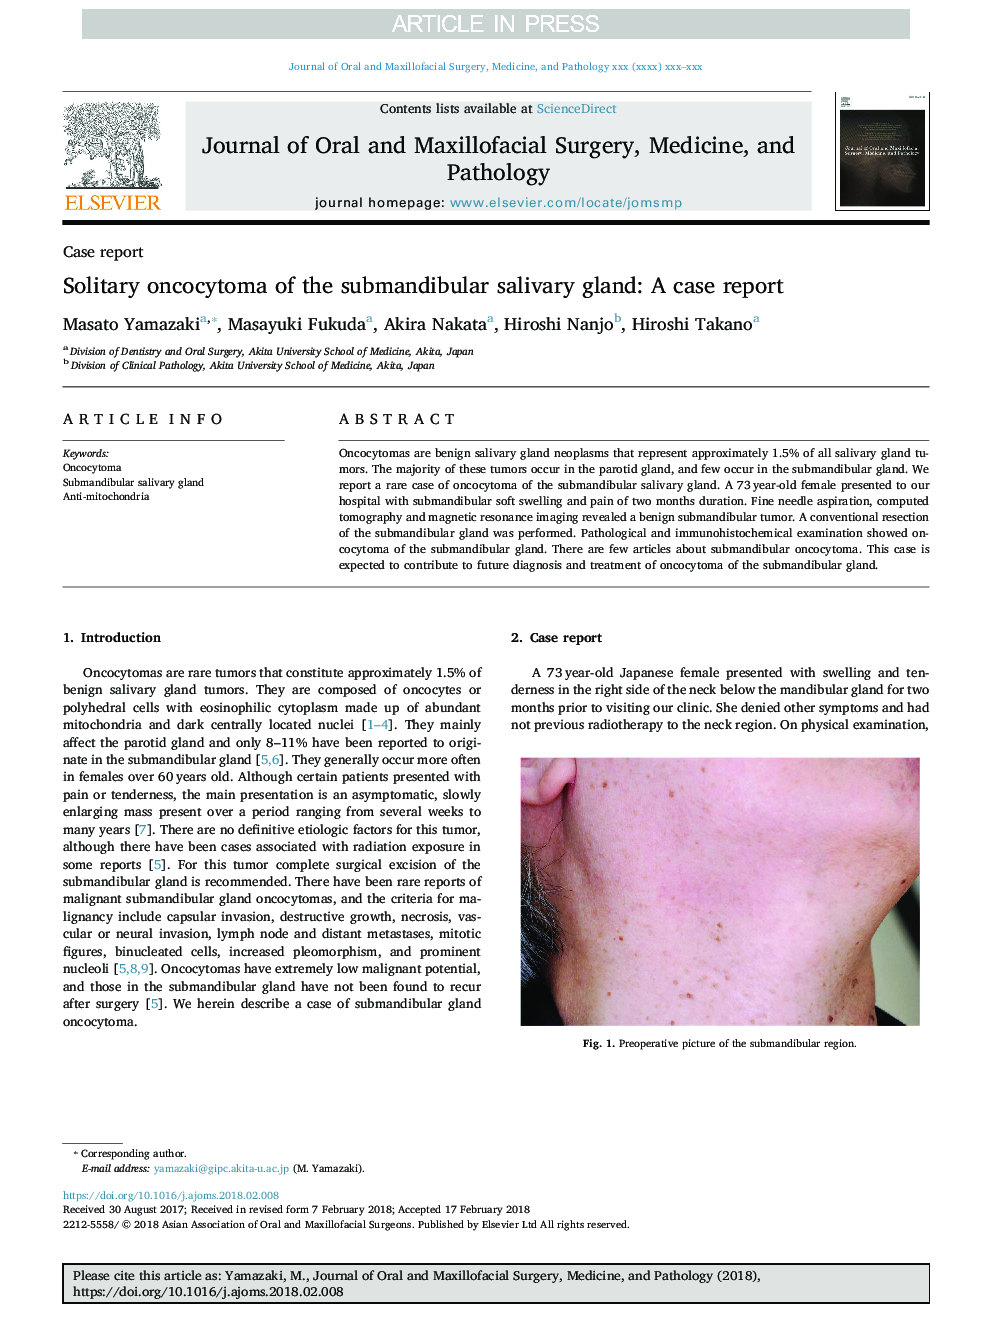 Solitary oncocytoma of the submandibular salivary gland: A case report